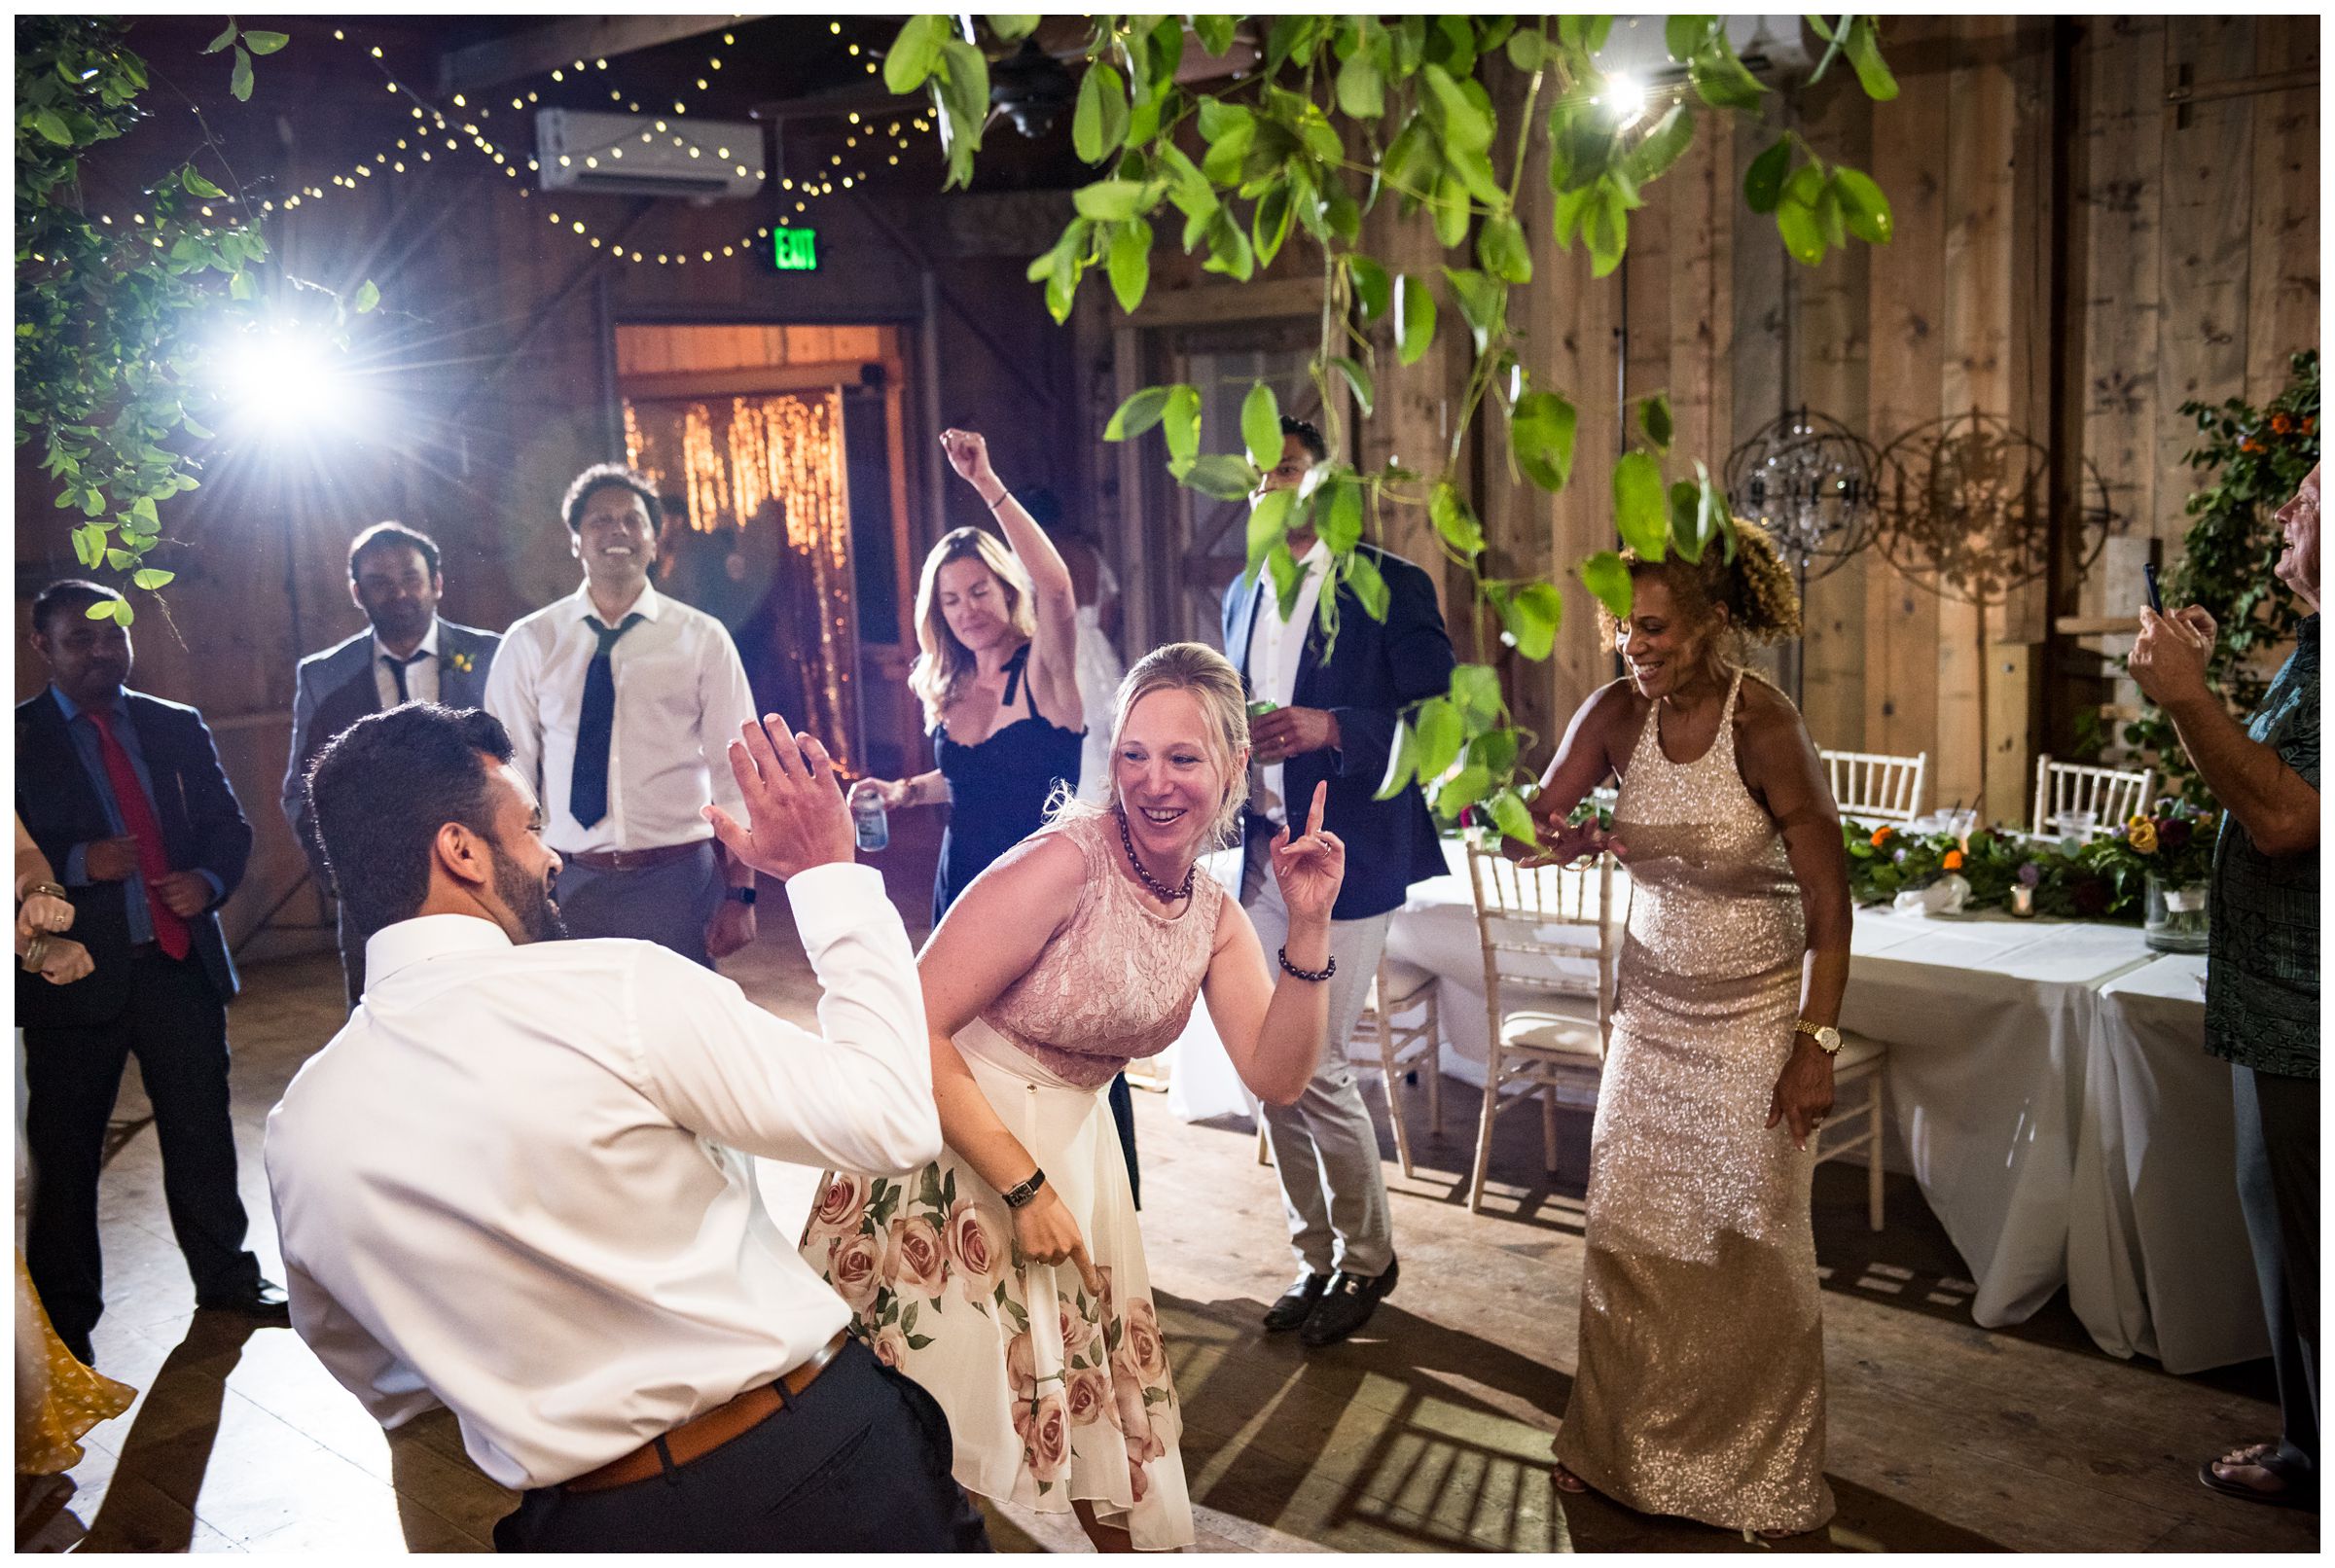 dancing at rustic barn wedding reception at Jorgensen Farms in Columbus